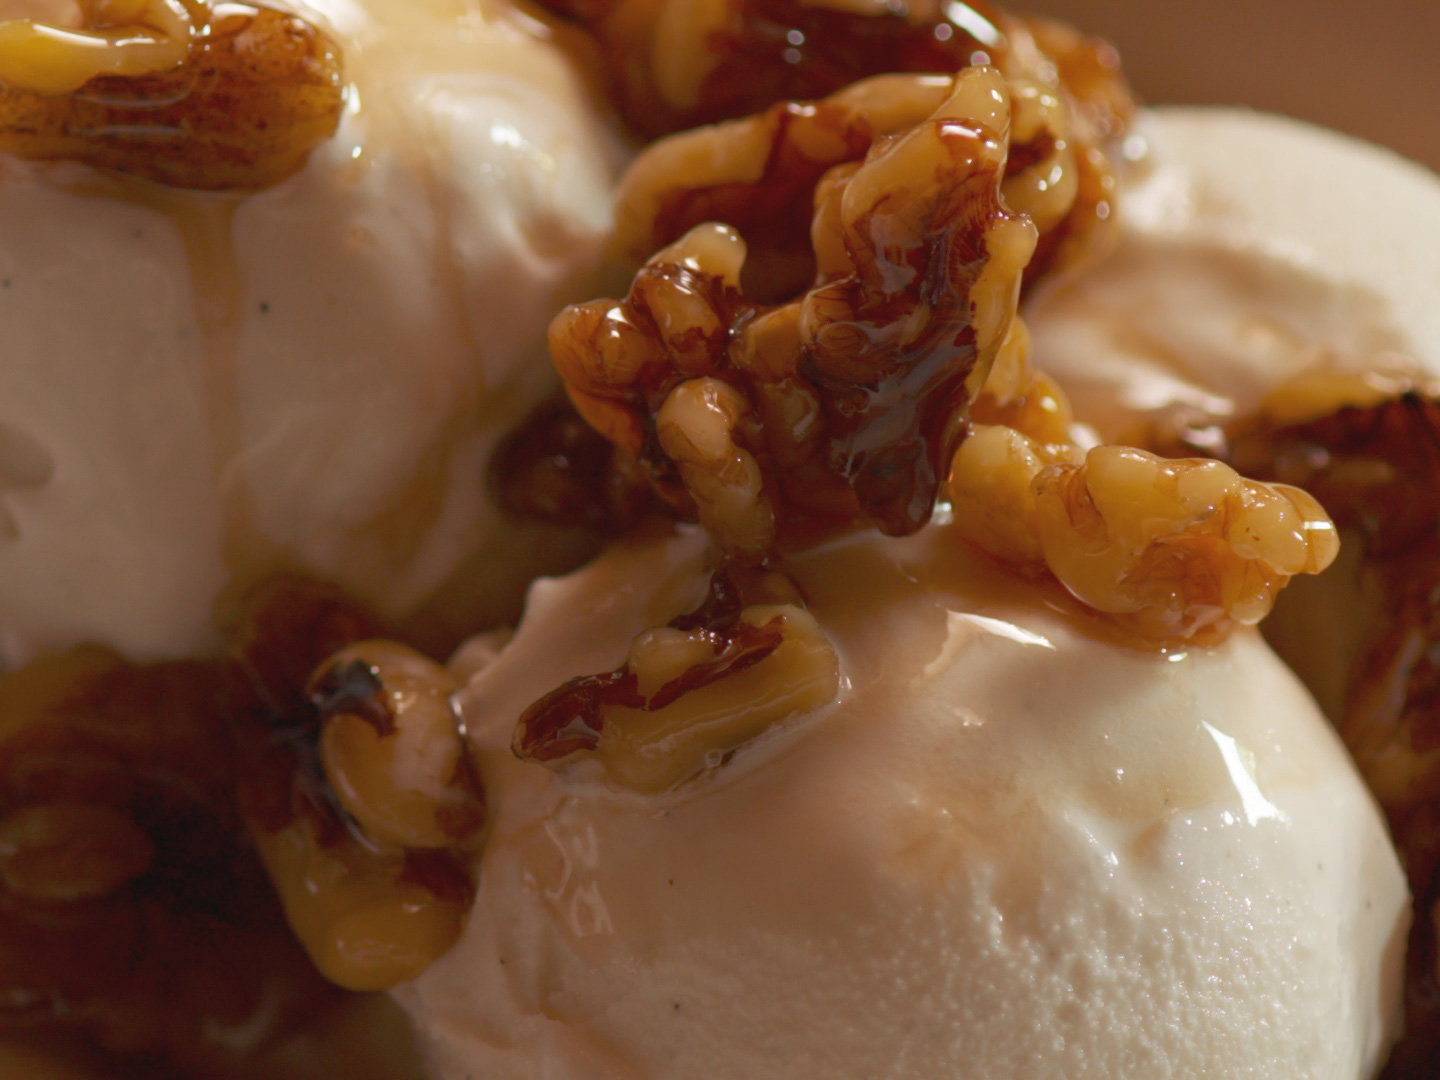 https://www.foodnetwork.com/content/dam/images/food/fullset/2015/8/18/1/RF0503H_Vanilla-Ice-Cream-with-Wet-Walnuts_s4x3.jpg